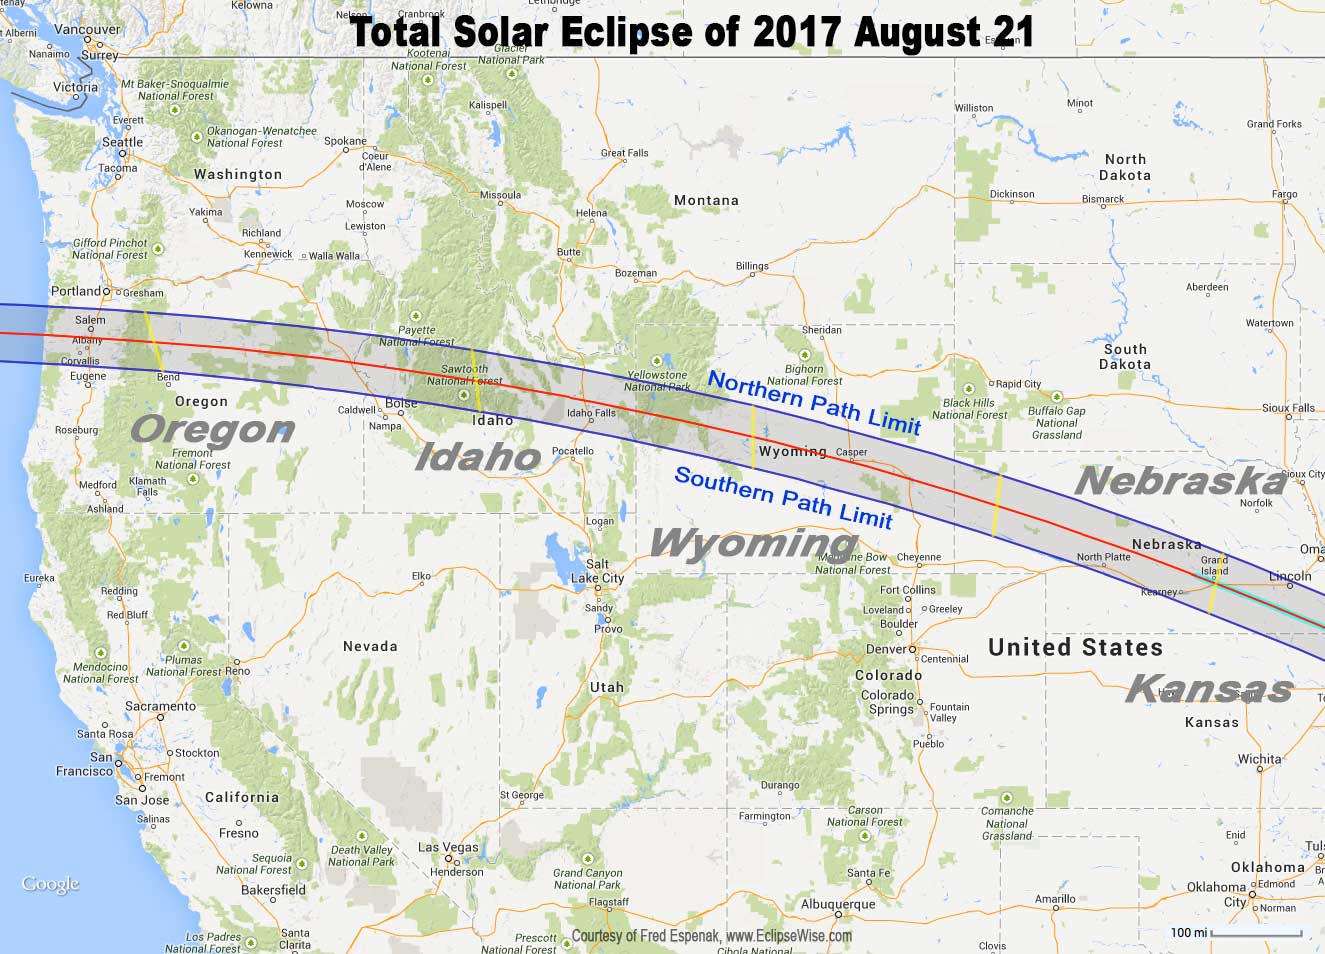 http://www.eclipsewise.com/solar/SEnews/TSE2017/TSE2017fig/TSE2017-west.jpg